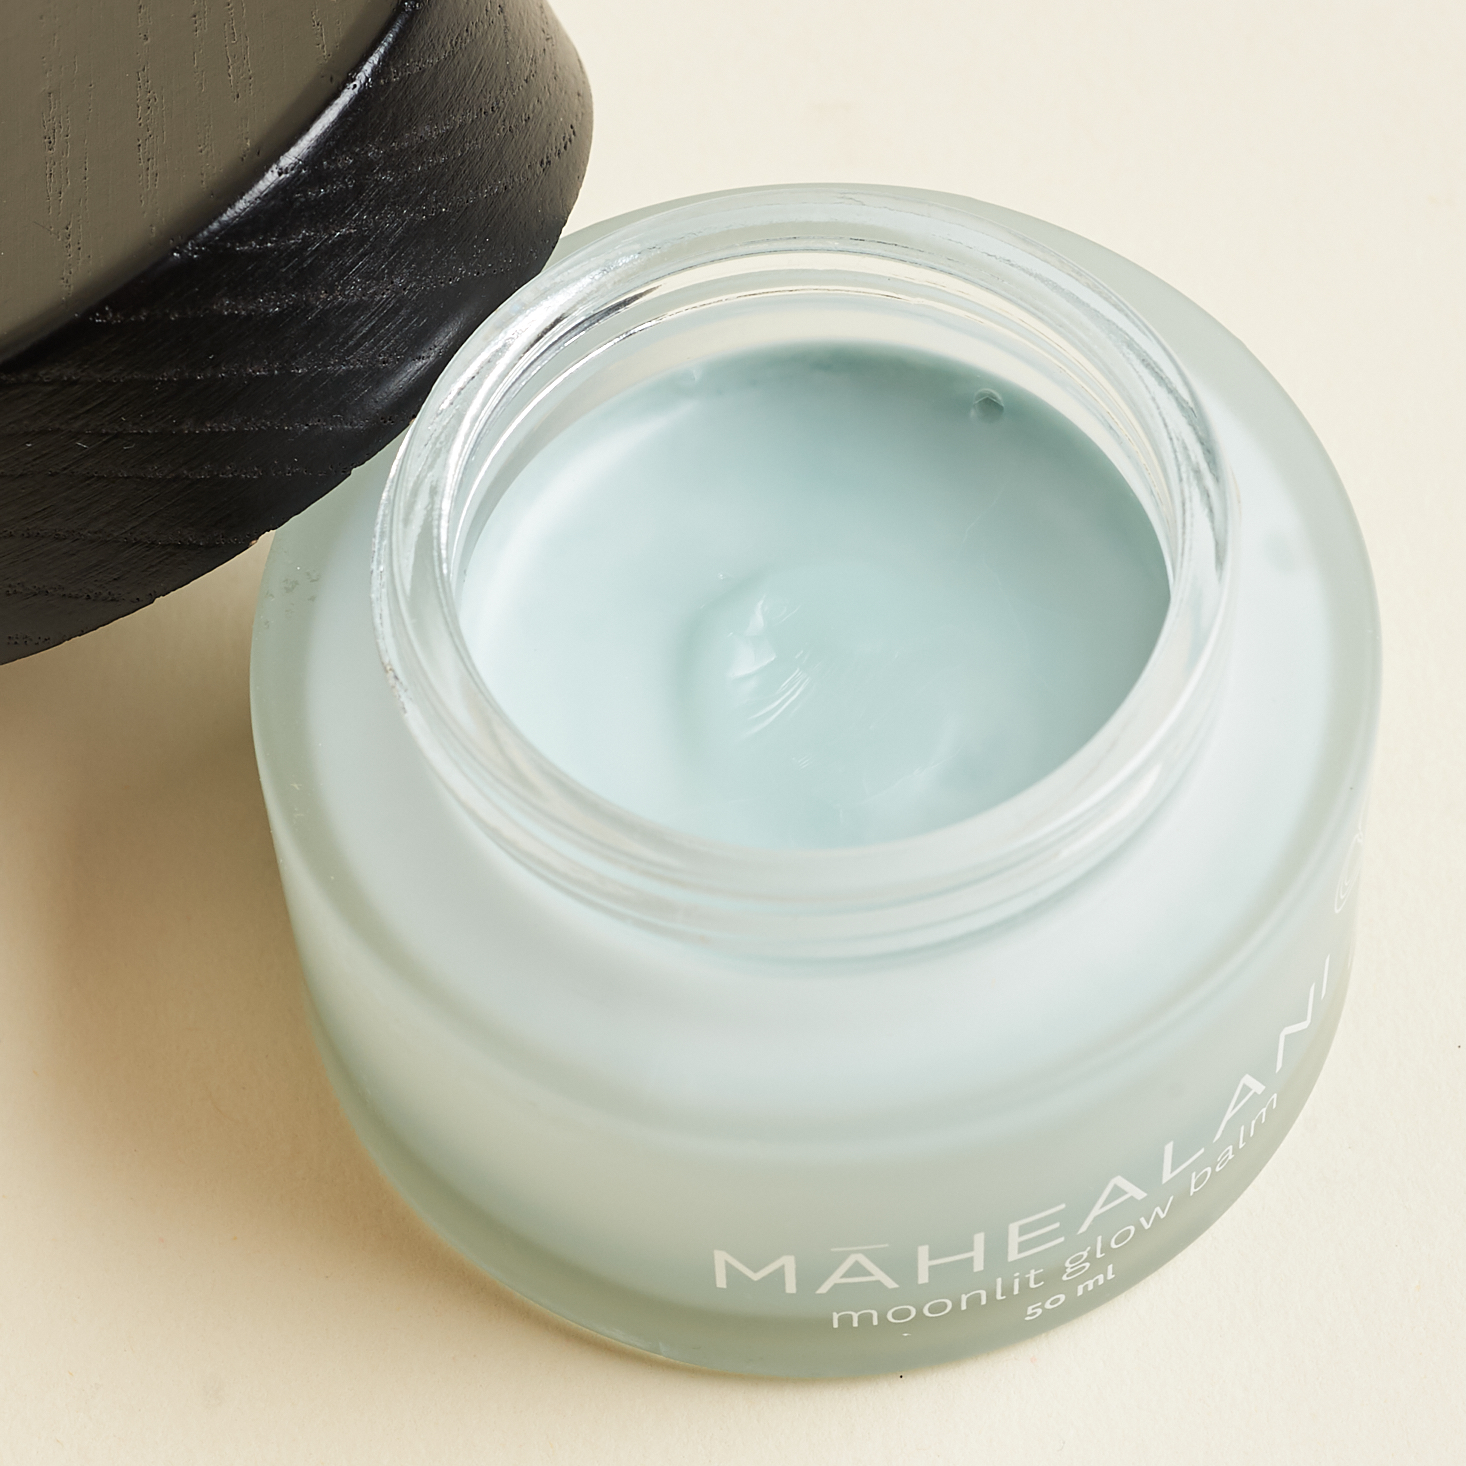 opened Honua Skincare Mahealani Moonlit Glow Balm, with cap leaning on edge